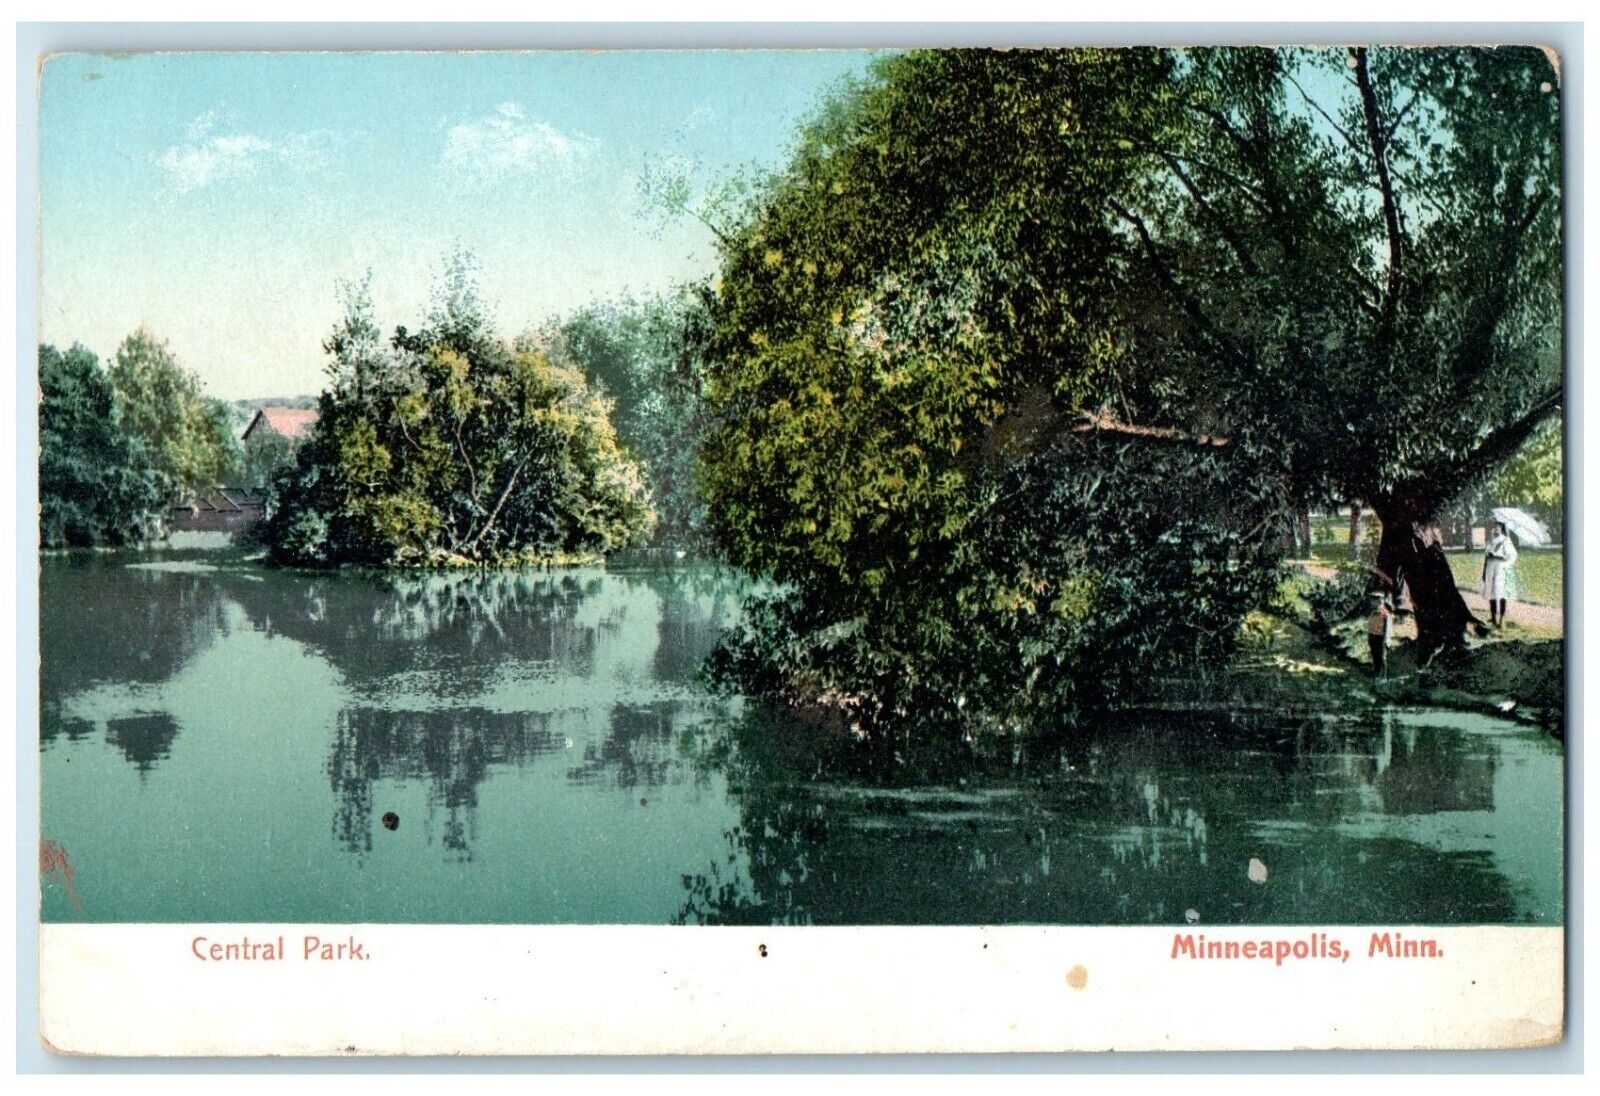 1905 Central Park River Woman Umbrella Minneapolis Minnesota MN Vintage Postcard